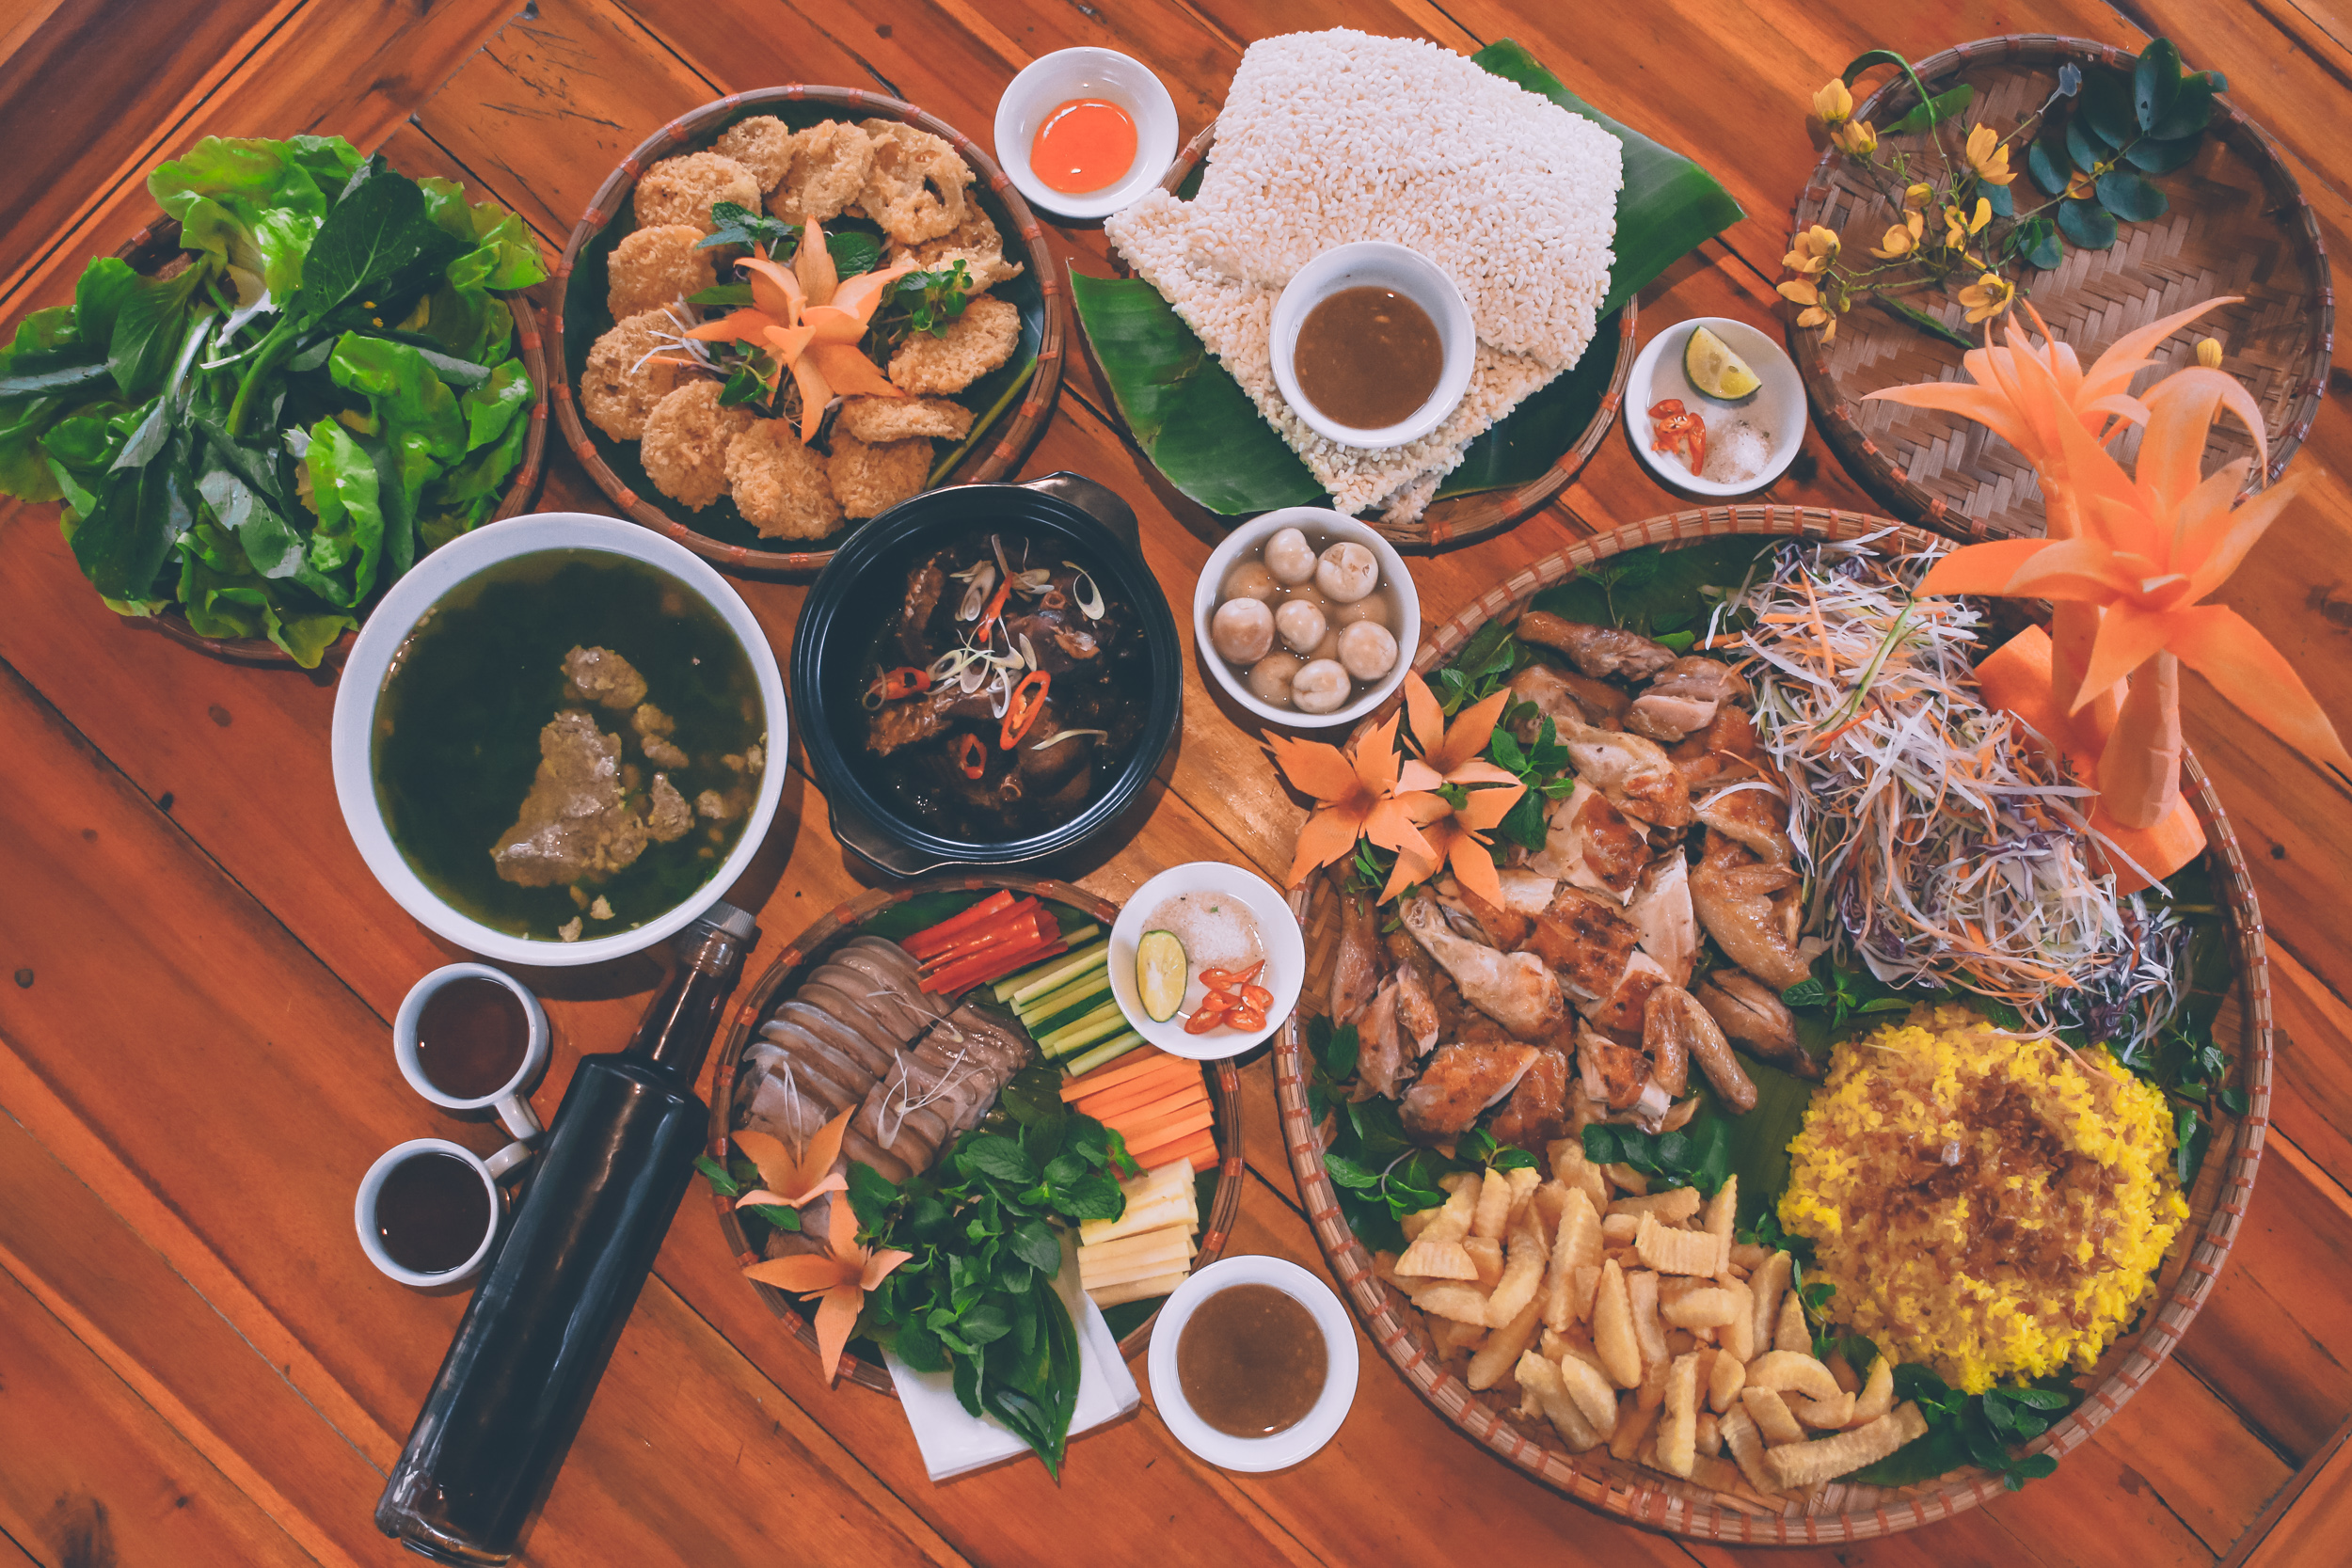 The essence of Thung Nham’s cuisine